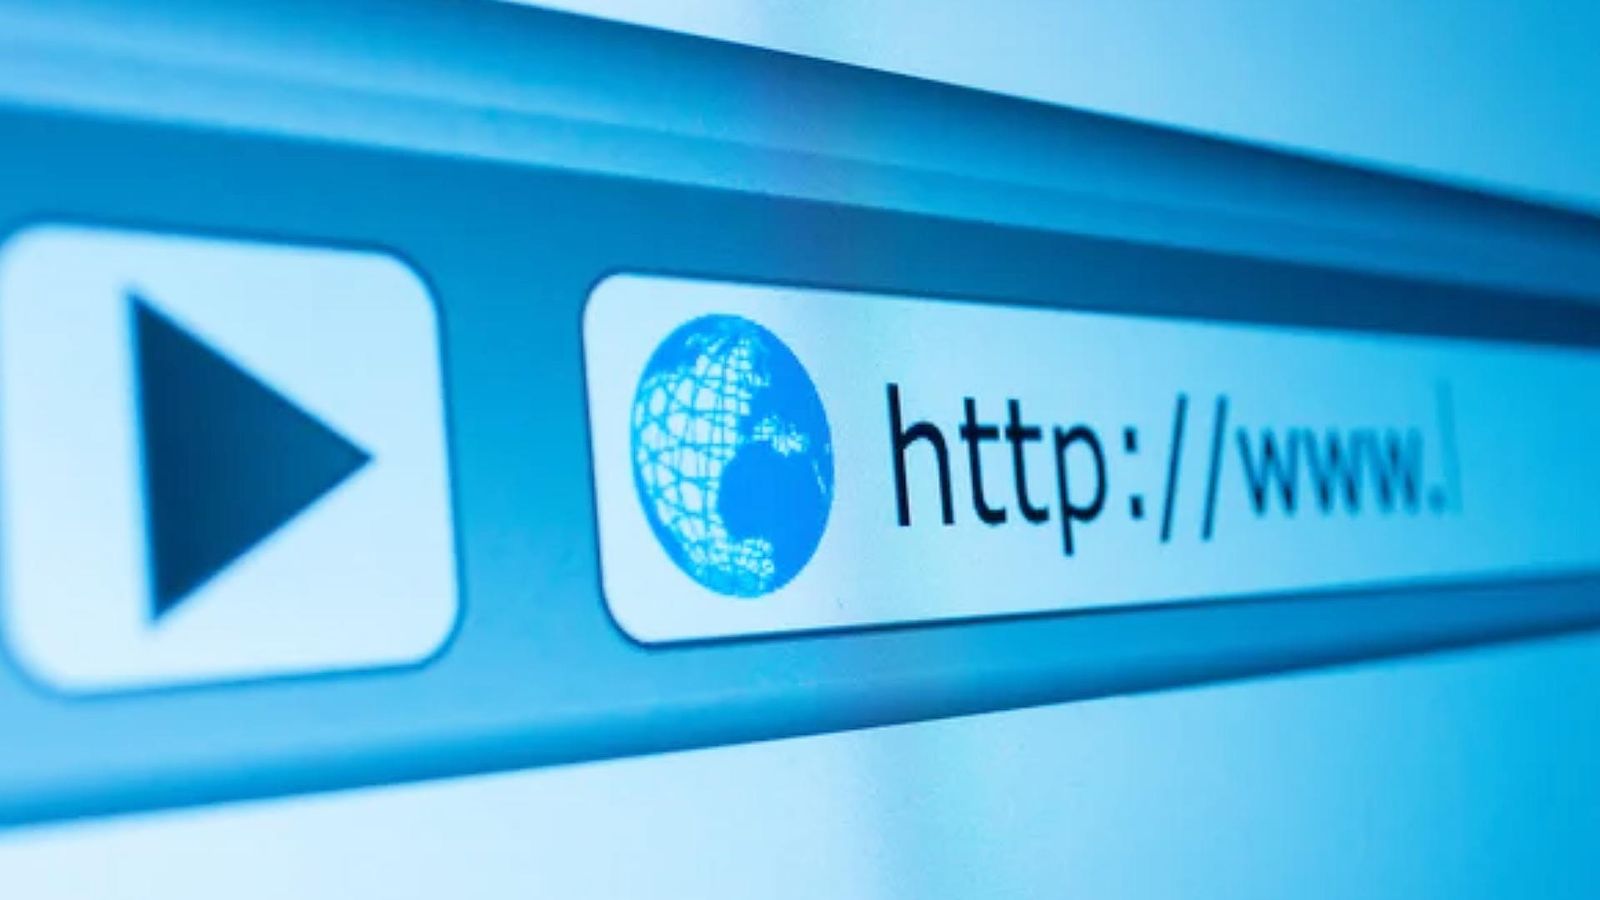 Web browser's address bar